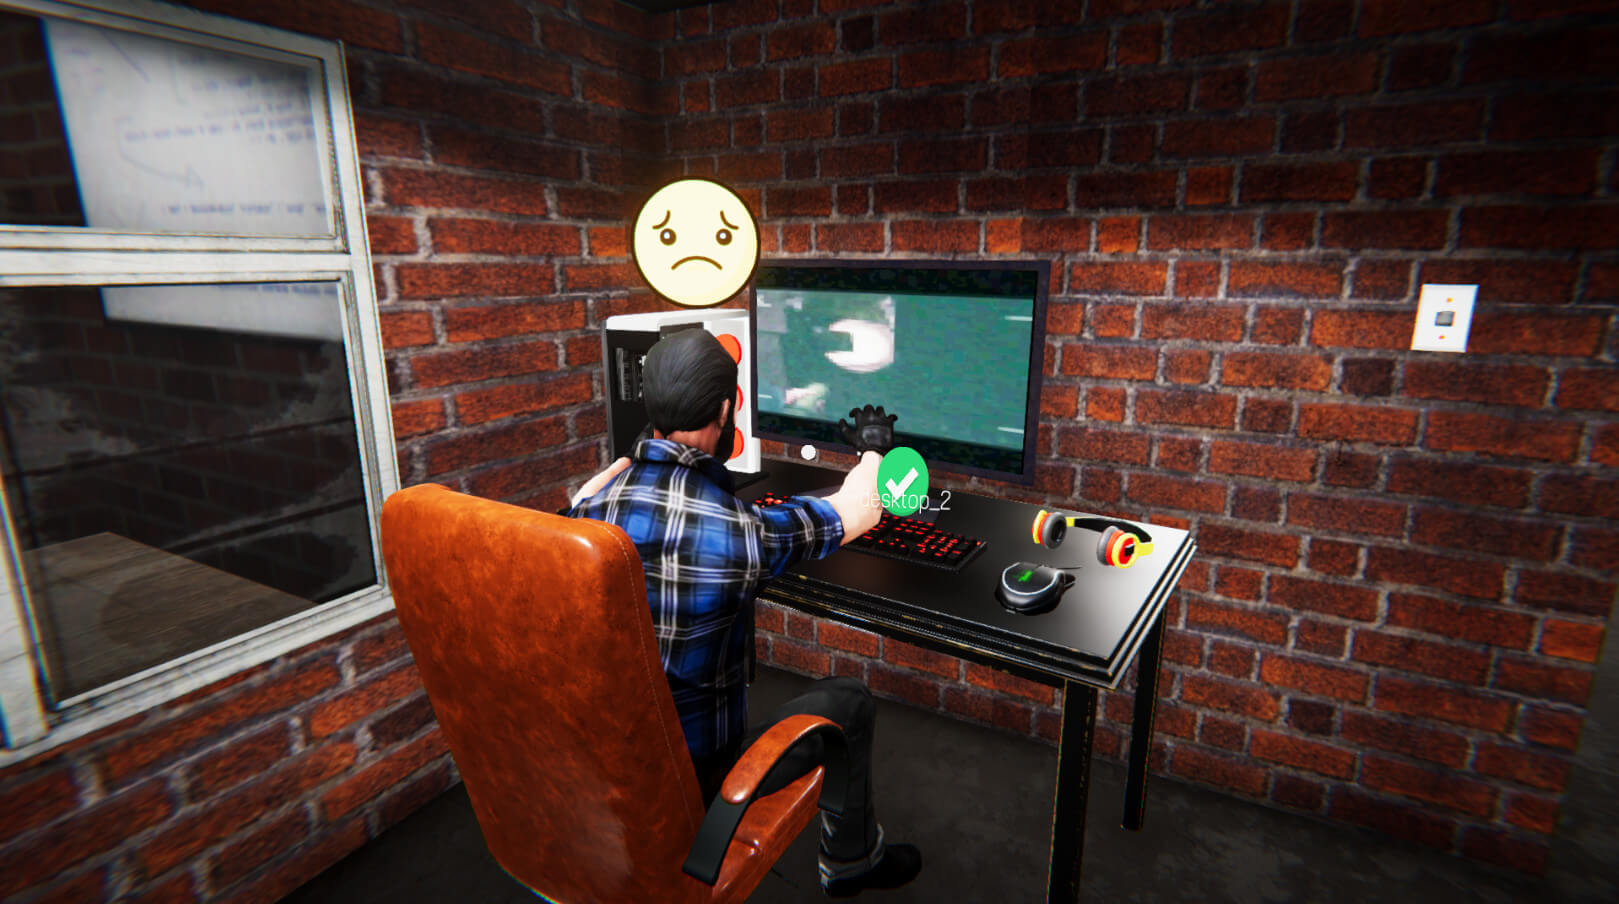 Симулятор интернета играть. Интернет кафе 2 игра. Симулятор кафе интернет кафе. Кафе симулятор 2. Игра интернет кафе симулятор.